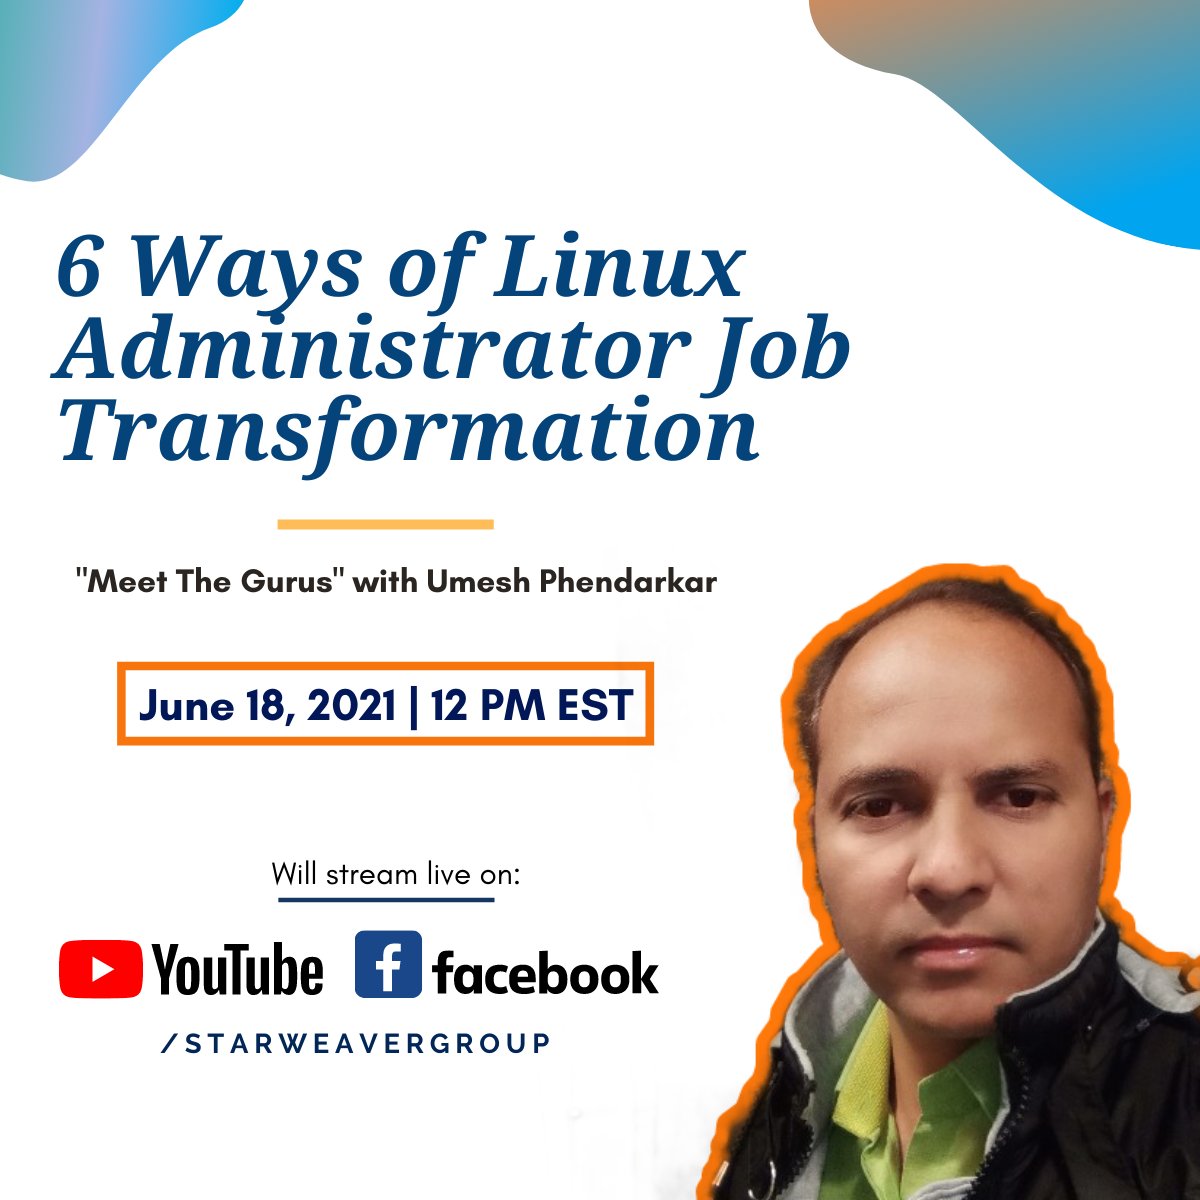 6 Ways of Linux Administrator Job Transformation with Umesh Phendarkar. Learn More: starweaver.com/meet-the-gurus…

#Linux #Admin #Jobtransformation #administration  
#Webinar #podcasts #edtech #starweaver